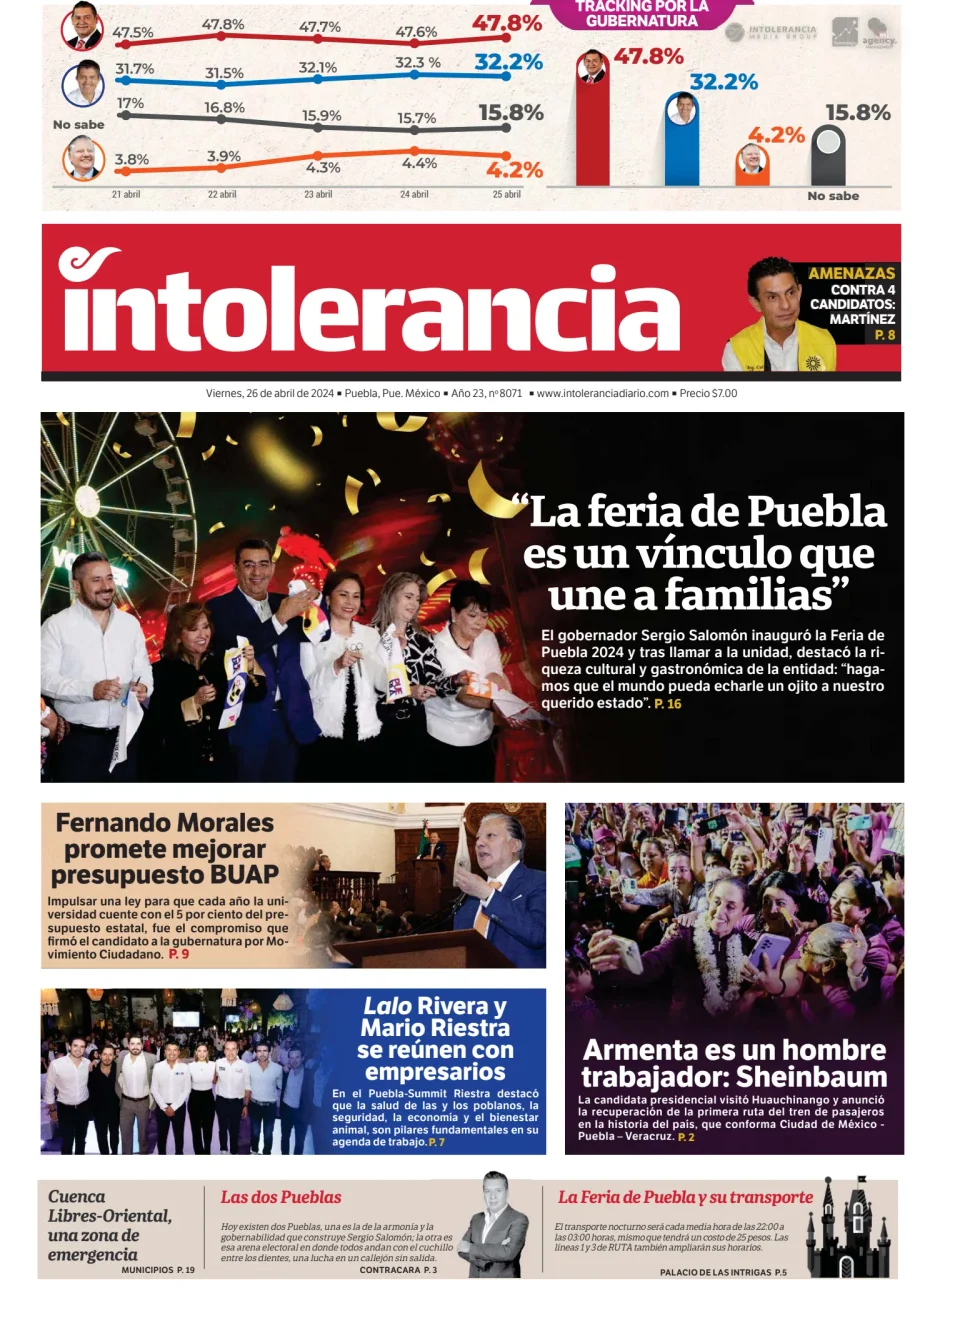 Intolerancia Diario